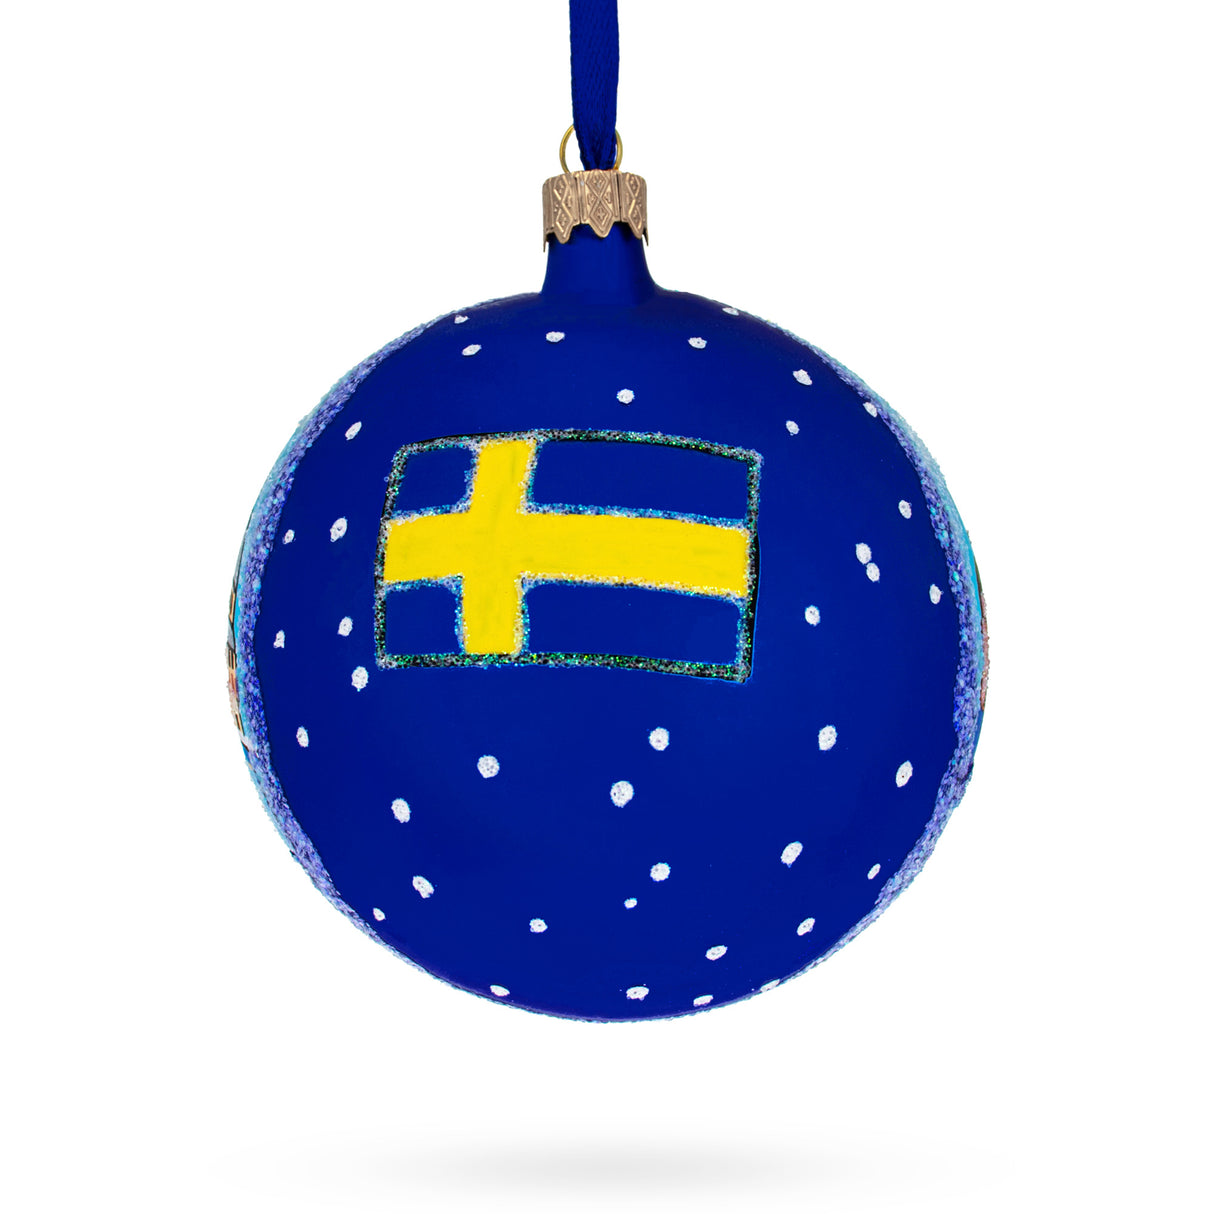 Buy Christmas Ornaments > Travel > Europe > Sweden by BestPysanky Online Gift Ship